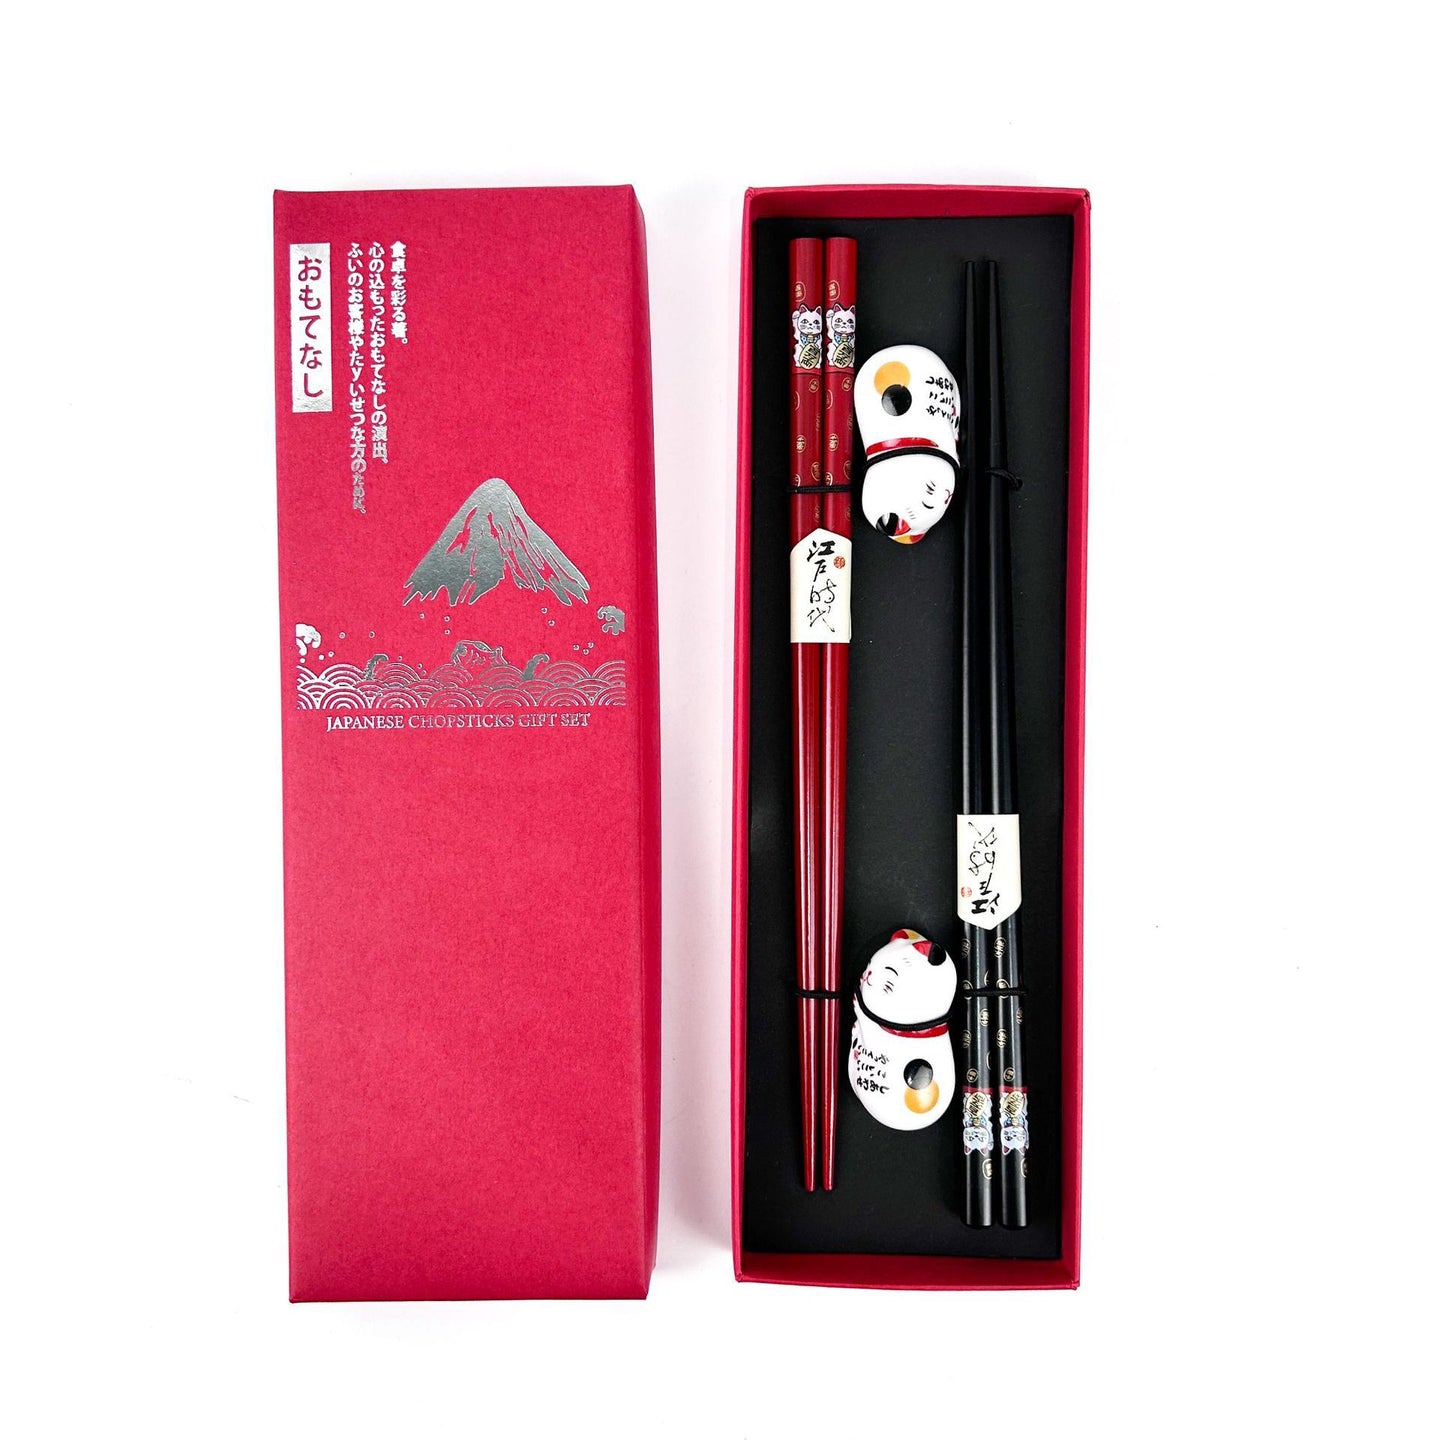 Maneki-neko | Panda chopsticks and chopstick holders set